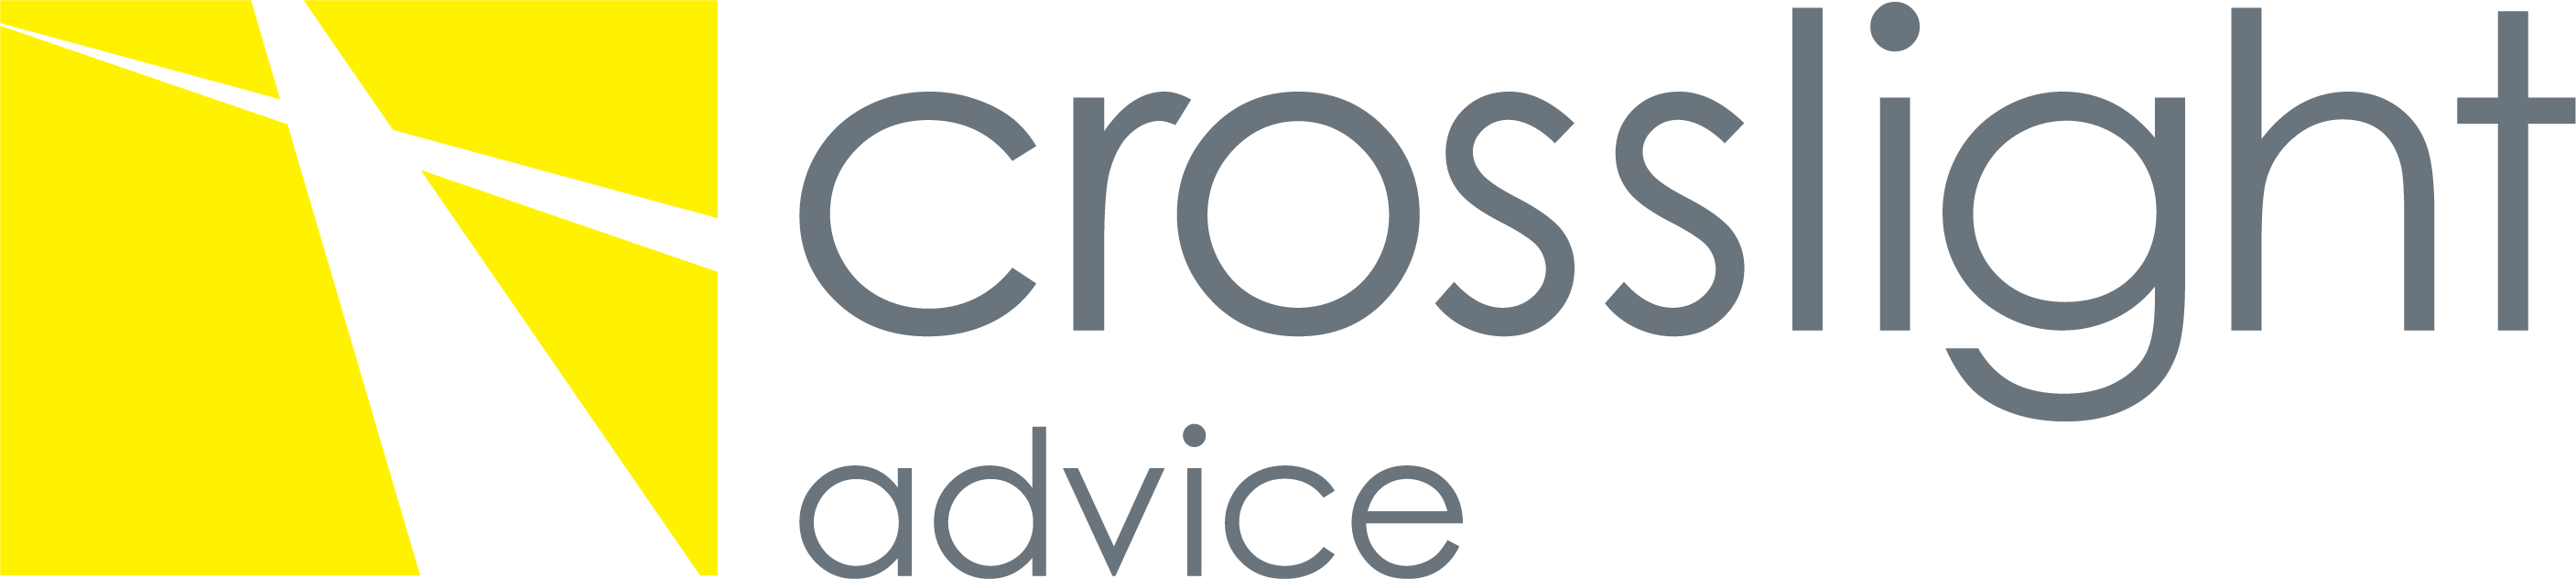 Crosslight Advice logo